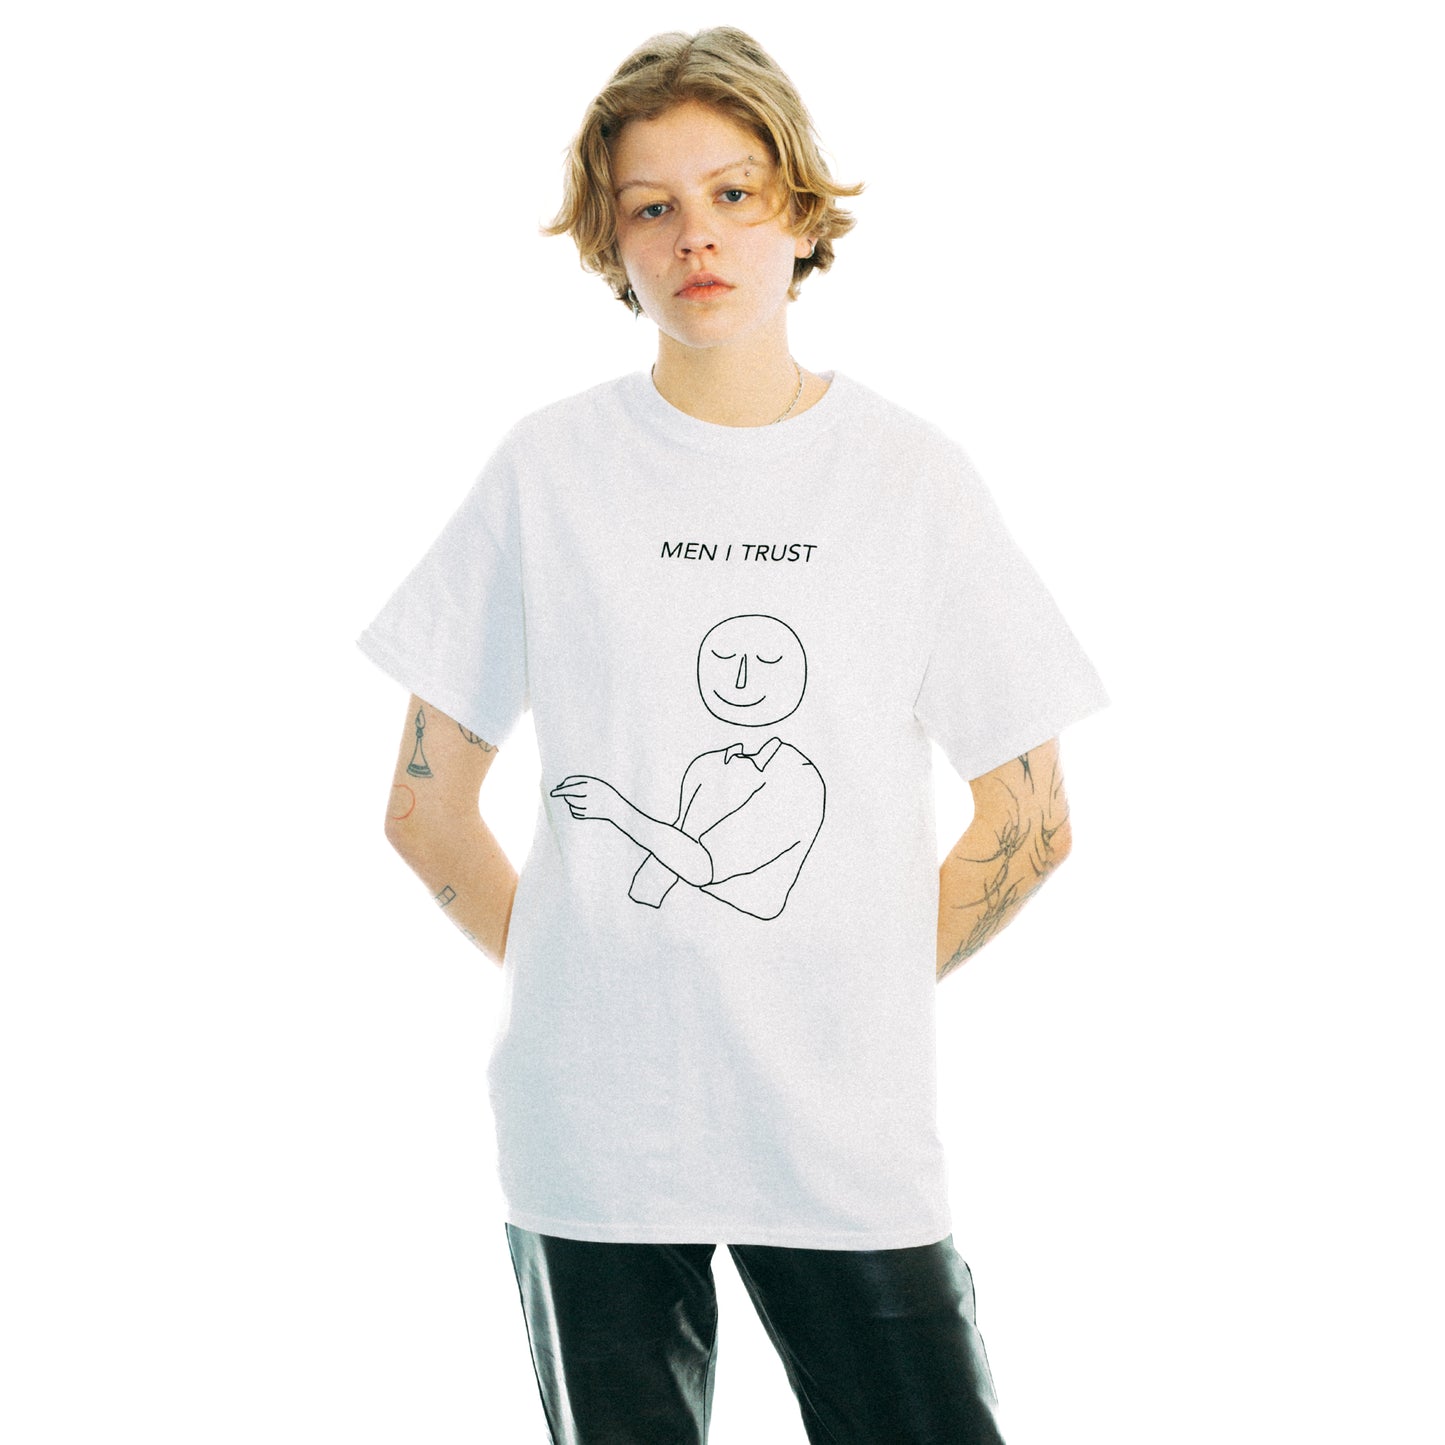 T-Shirt - Classic MIT White ~ Shop Men I Trust